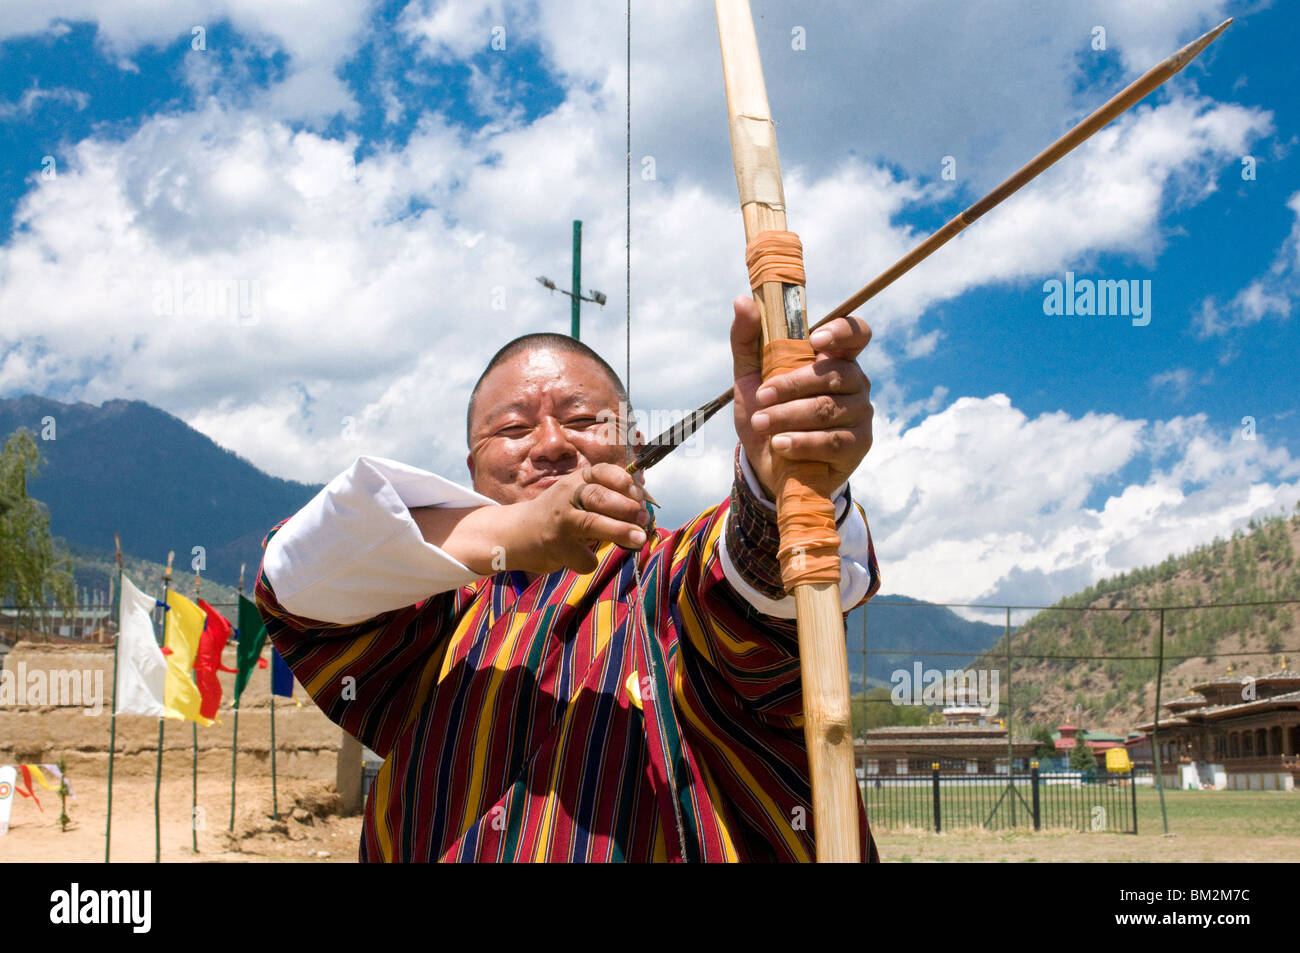 Traditionally dressed Bhutanese man practising the national sport of archery in the national stadium, Thimpu, Bhutan Stock Photo